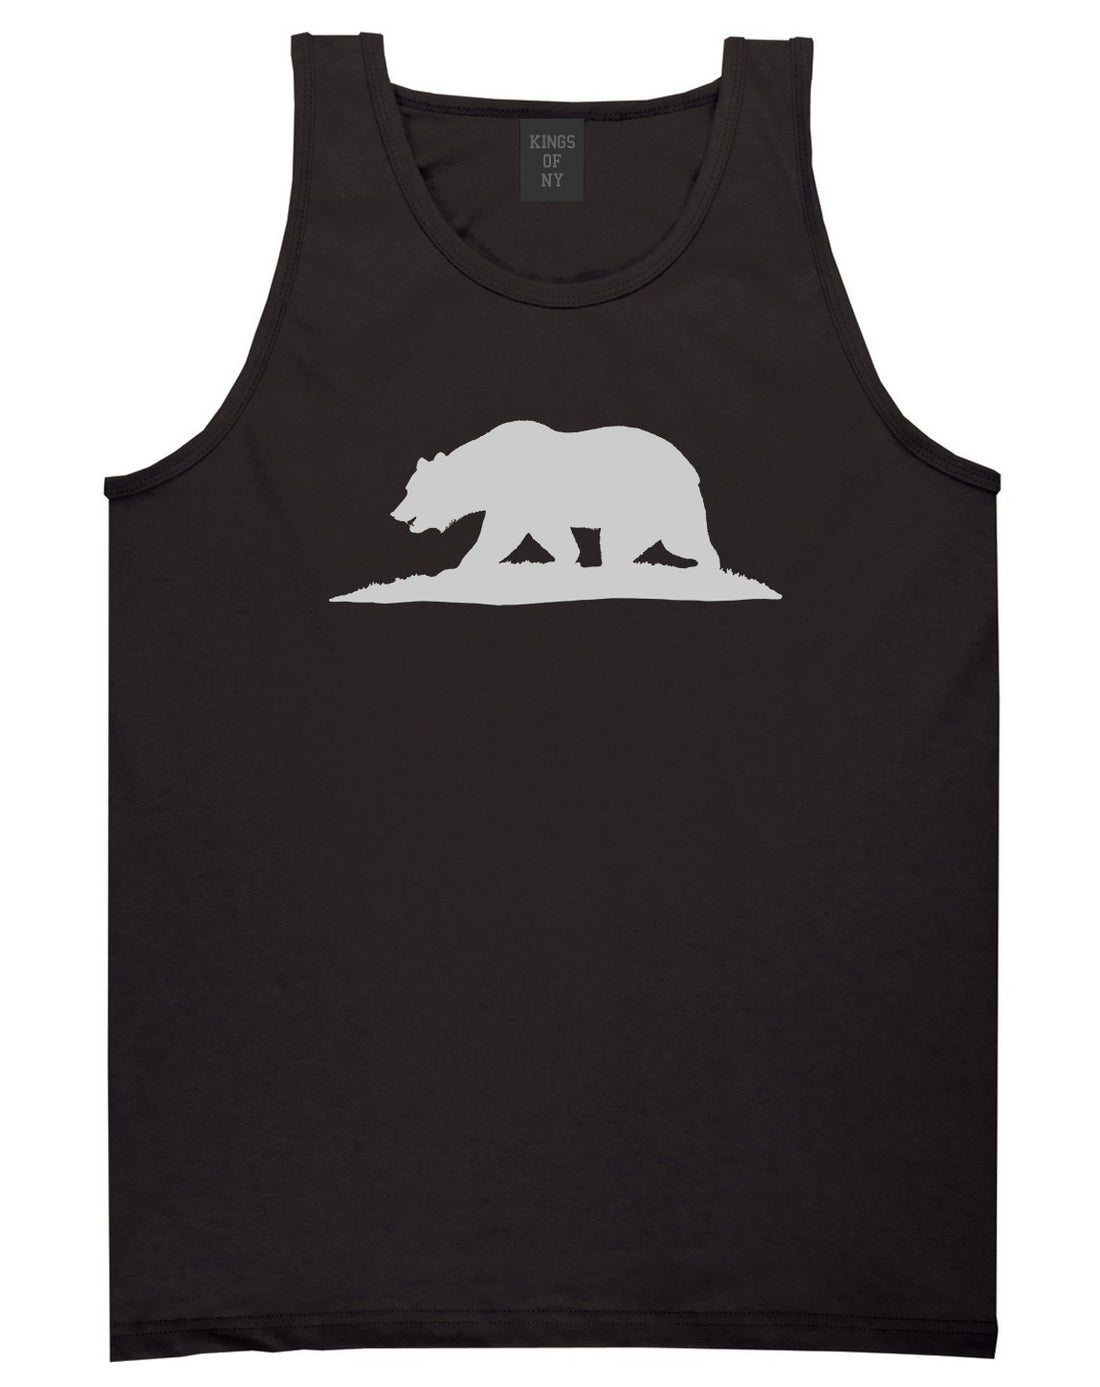 Bear Logo California Republic Black Tank Top Shirt by Kings Of NY